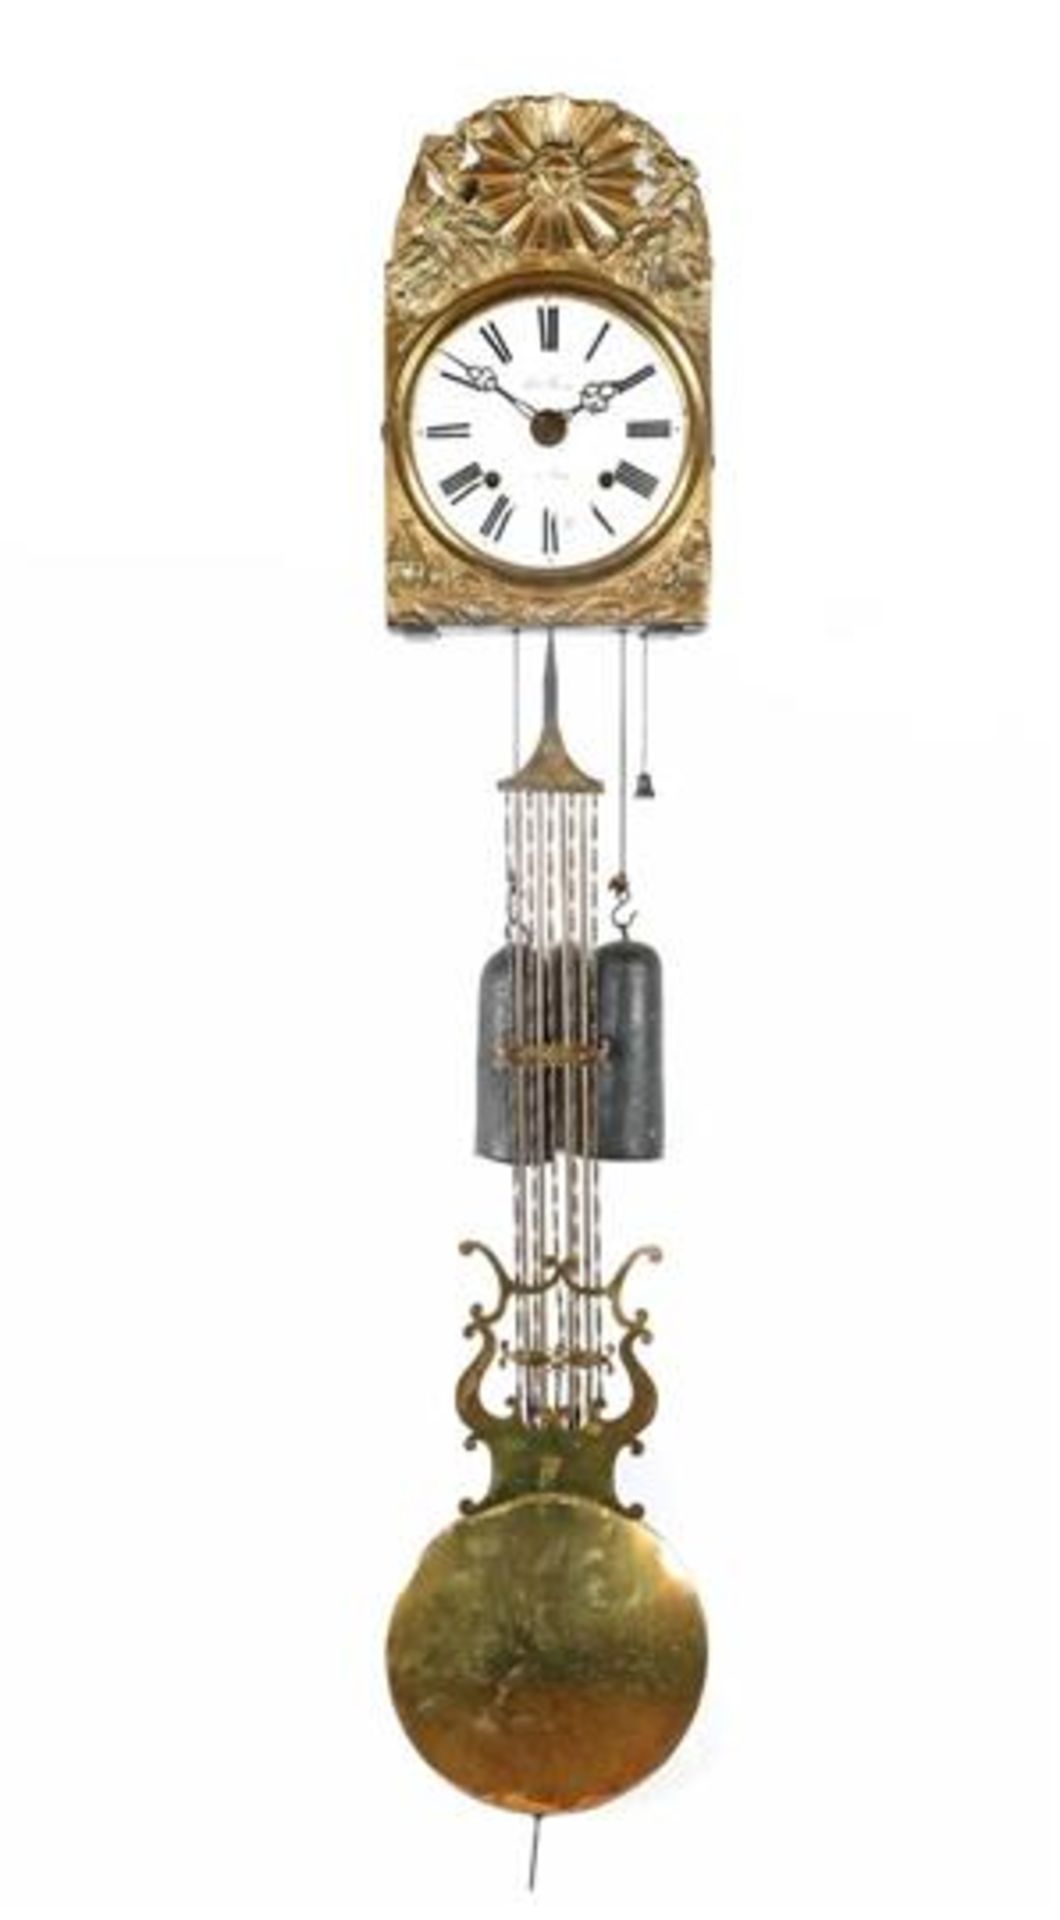 Antique French comtoise clock with harp pendulum, address Serre a Dax, ca.1860